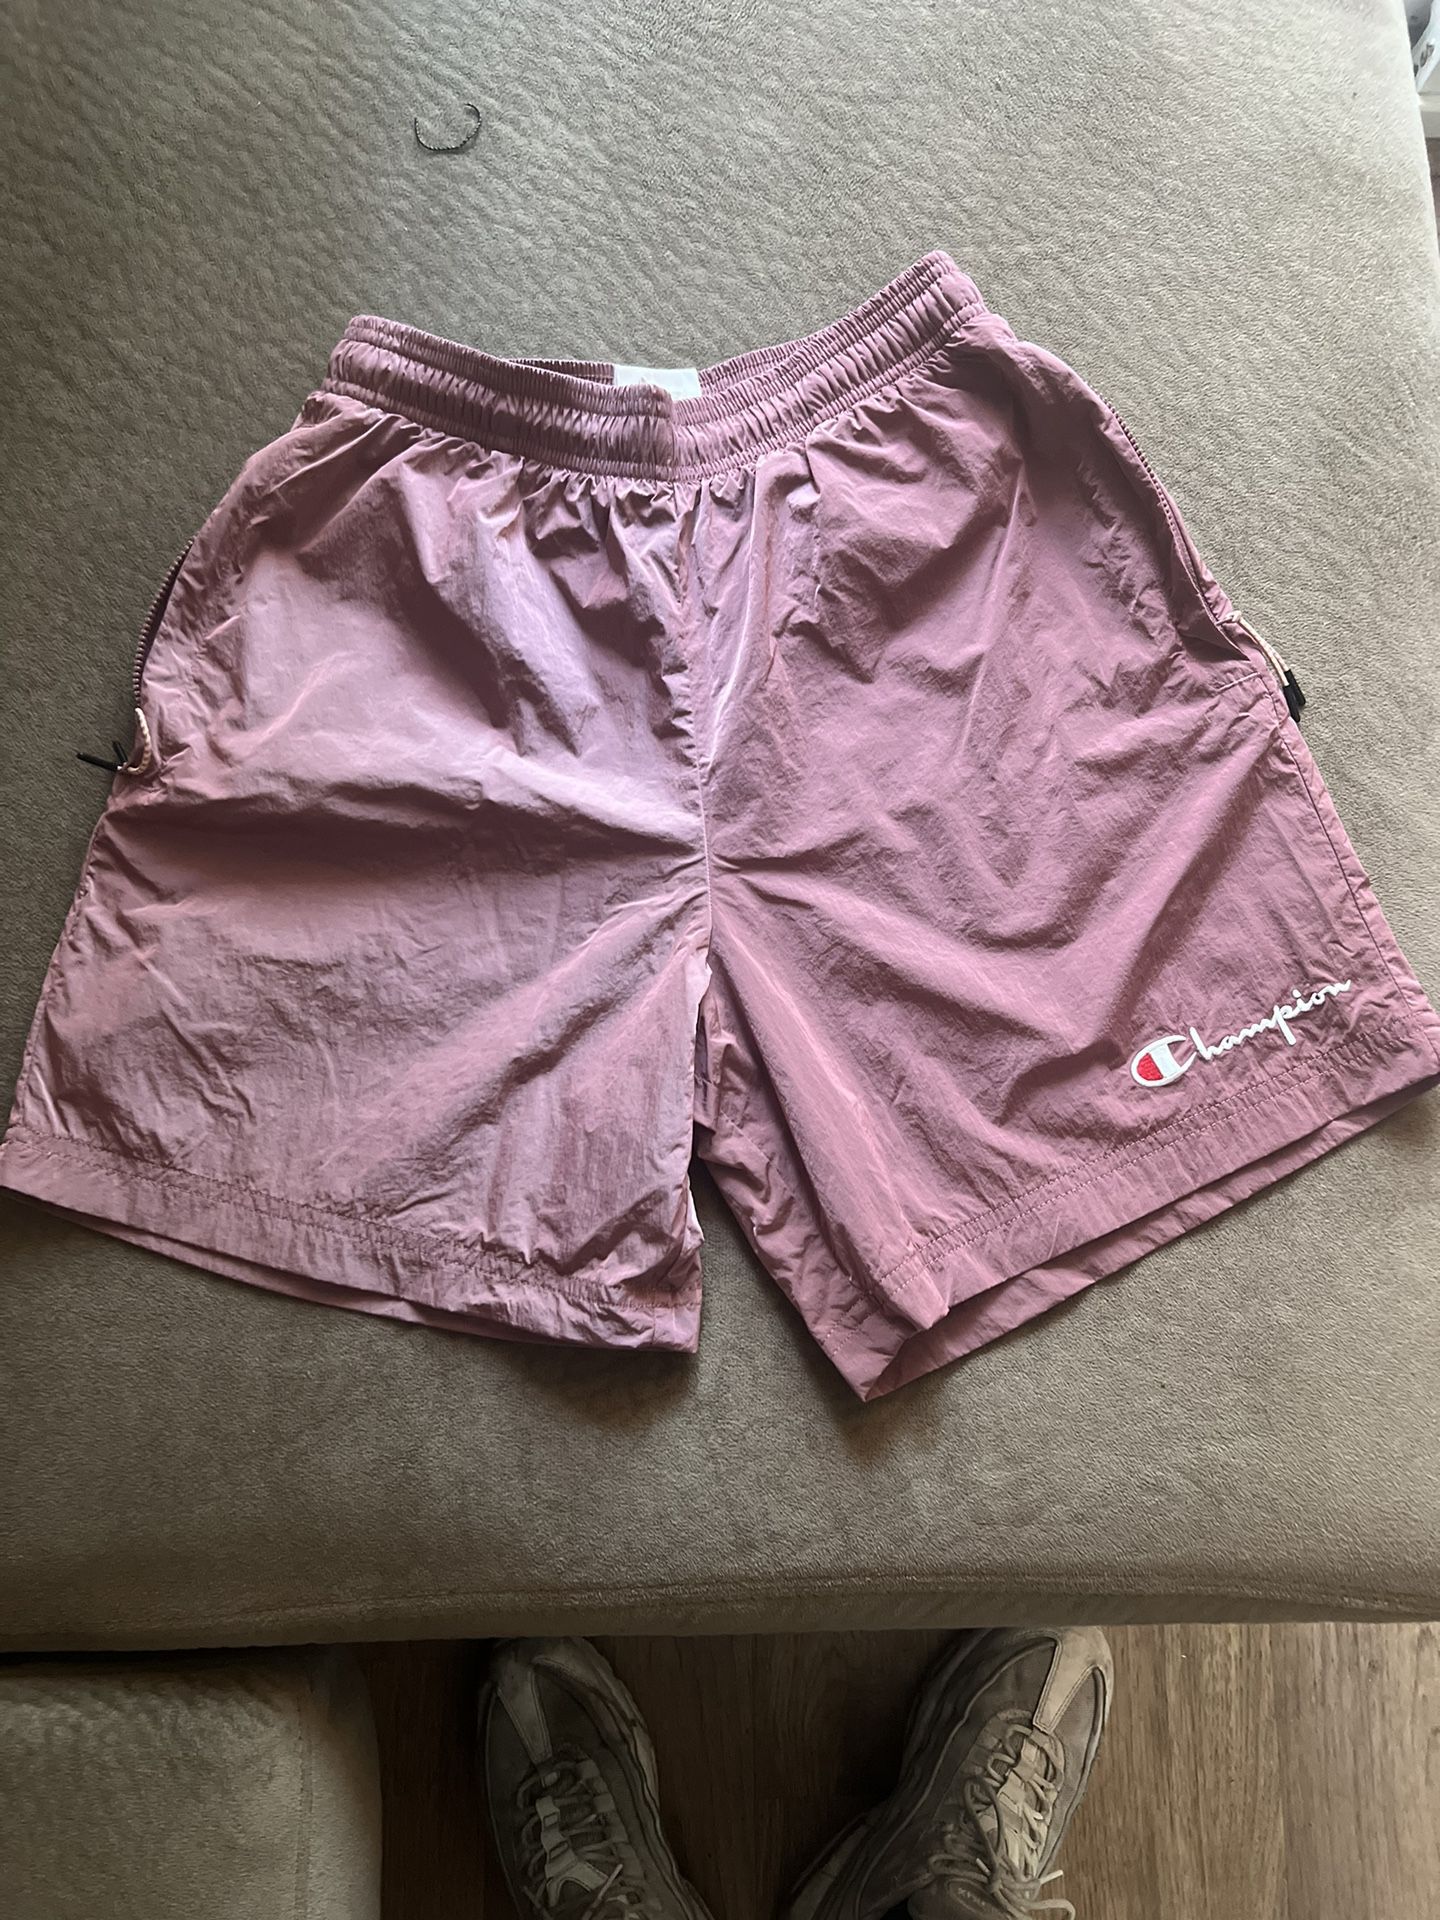 NEW Champion Purple Pink Short Shorts Small